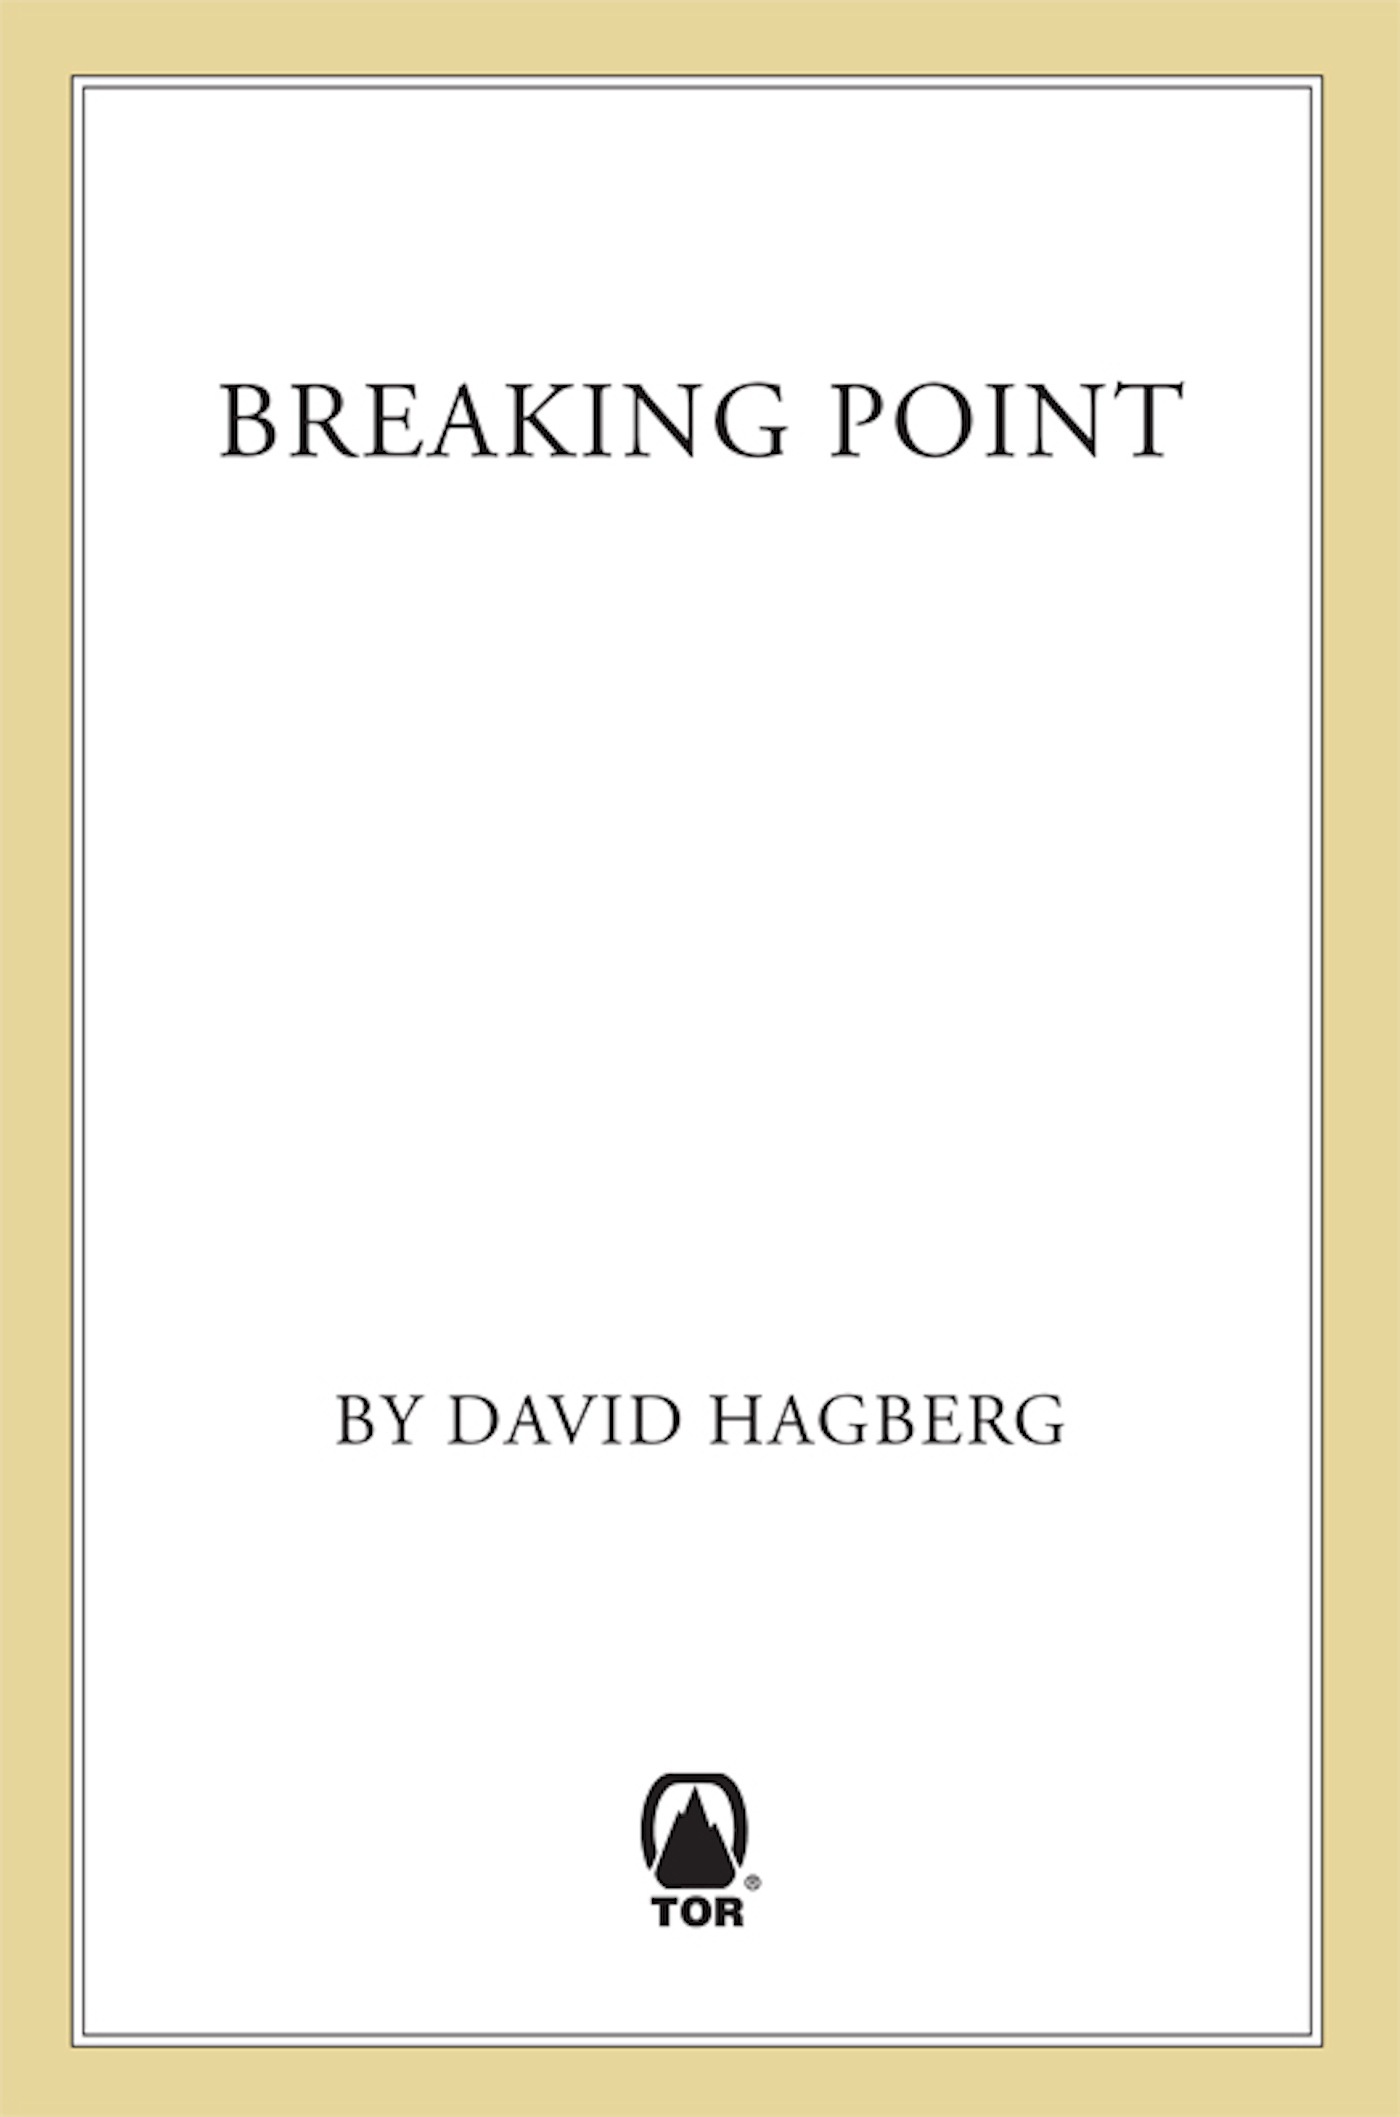 Breaking Point by David Hagberg